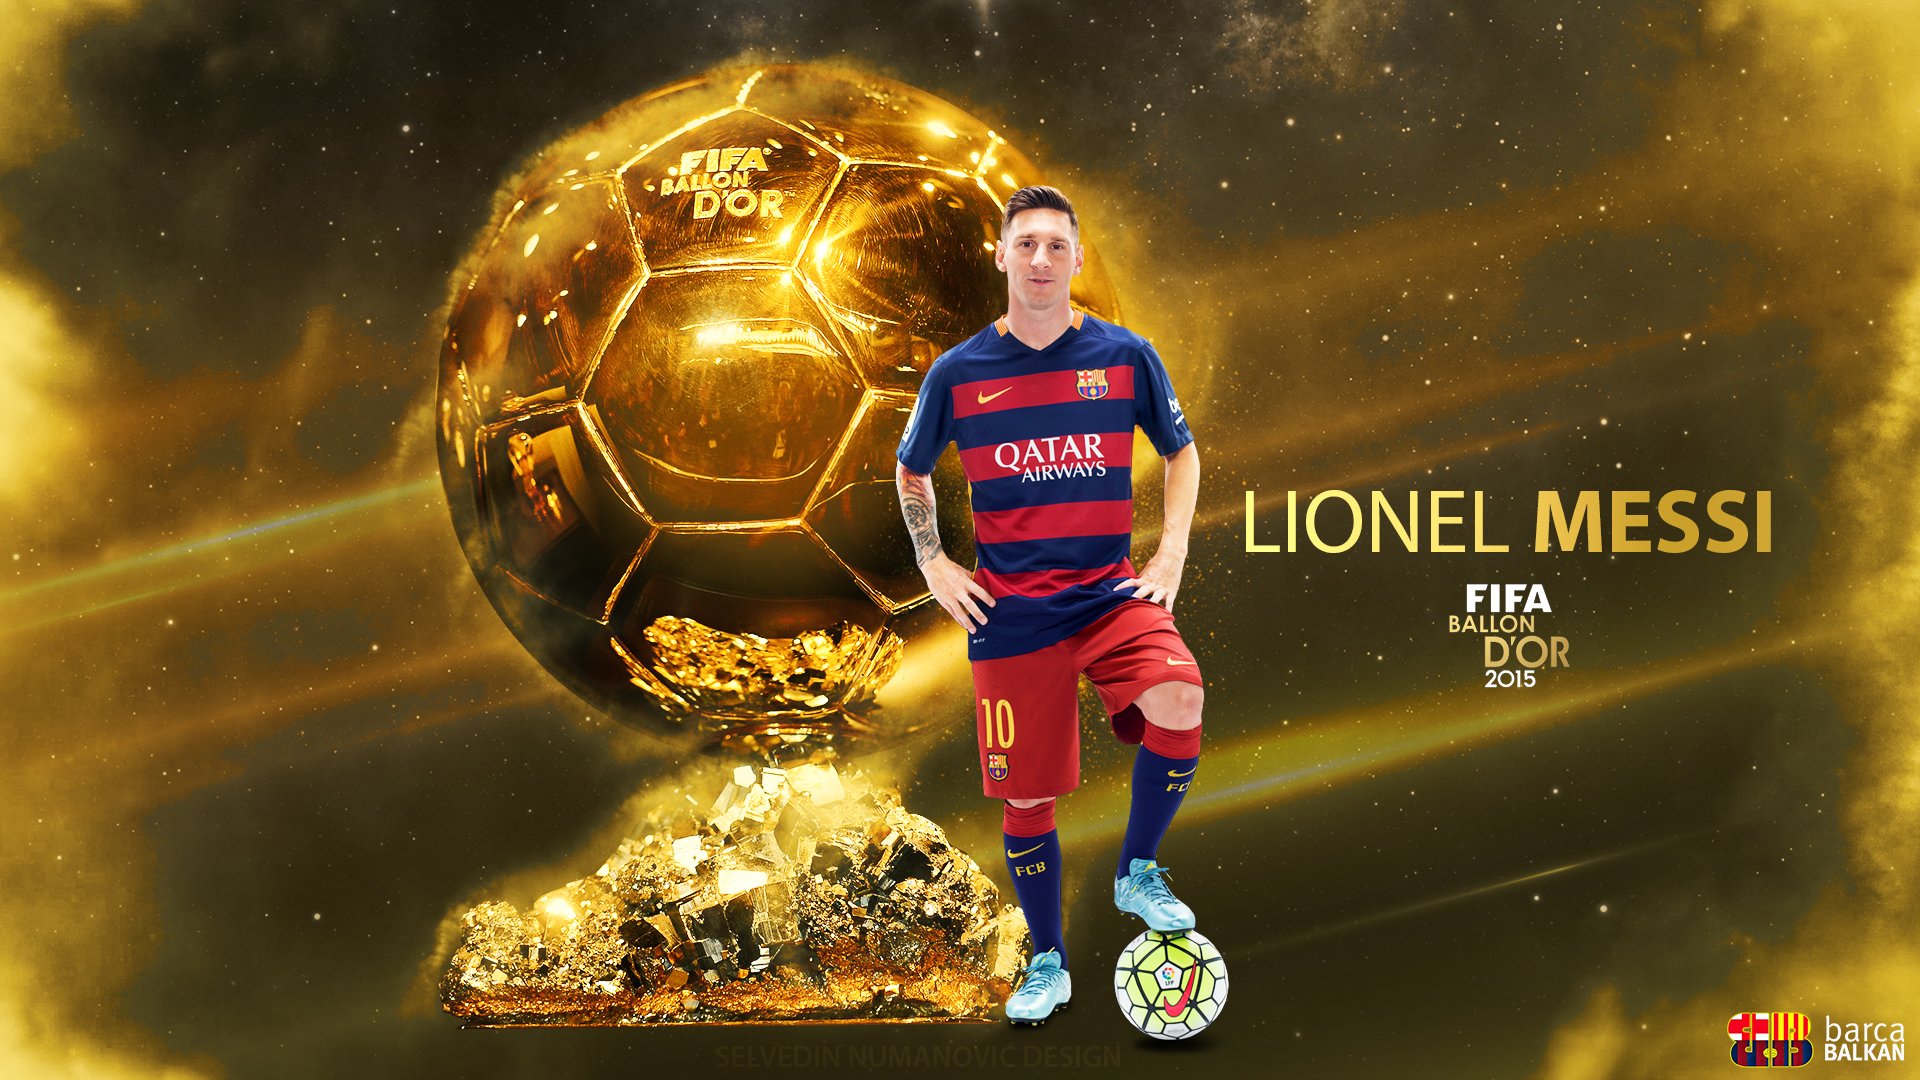 Lionel Messi FIFA Ballon dOr 2015 HD wallpaper by SelvedinFCB on 1920x1080